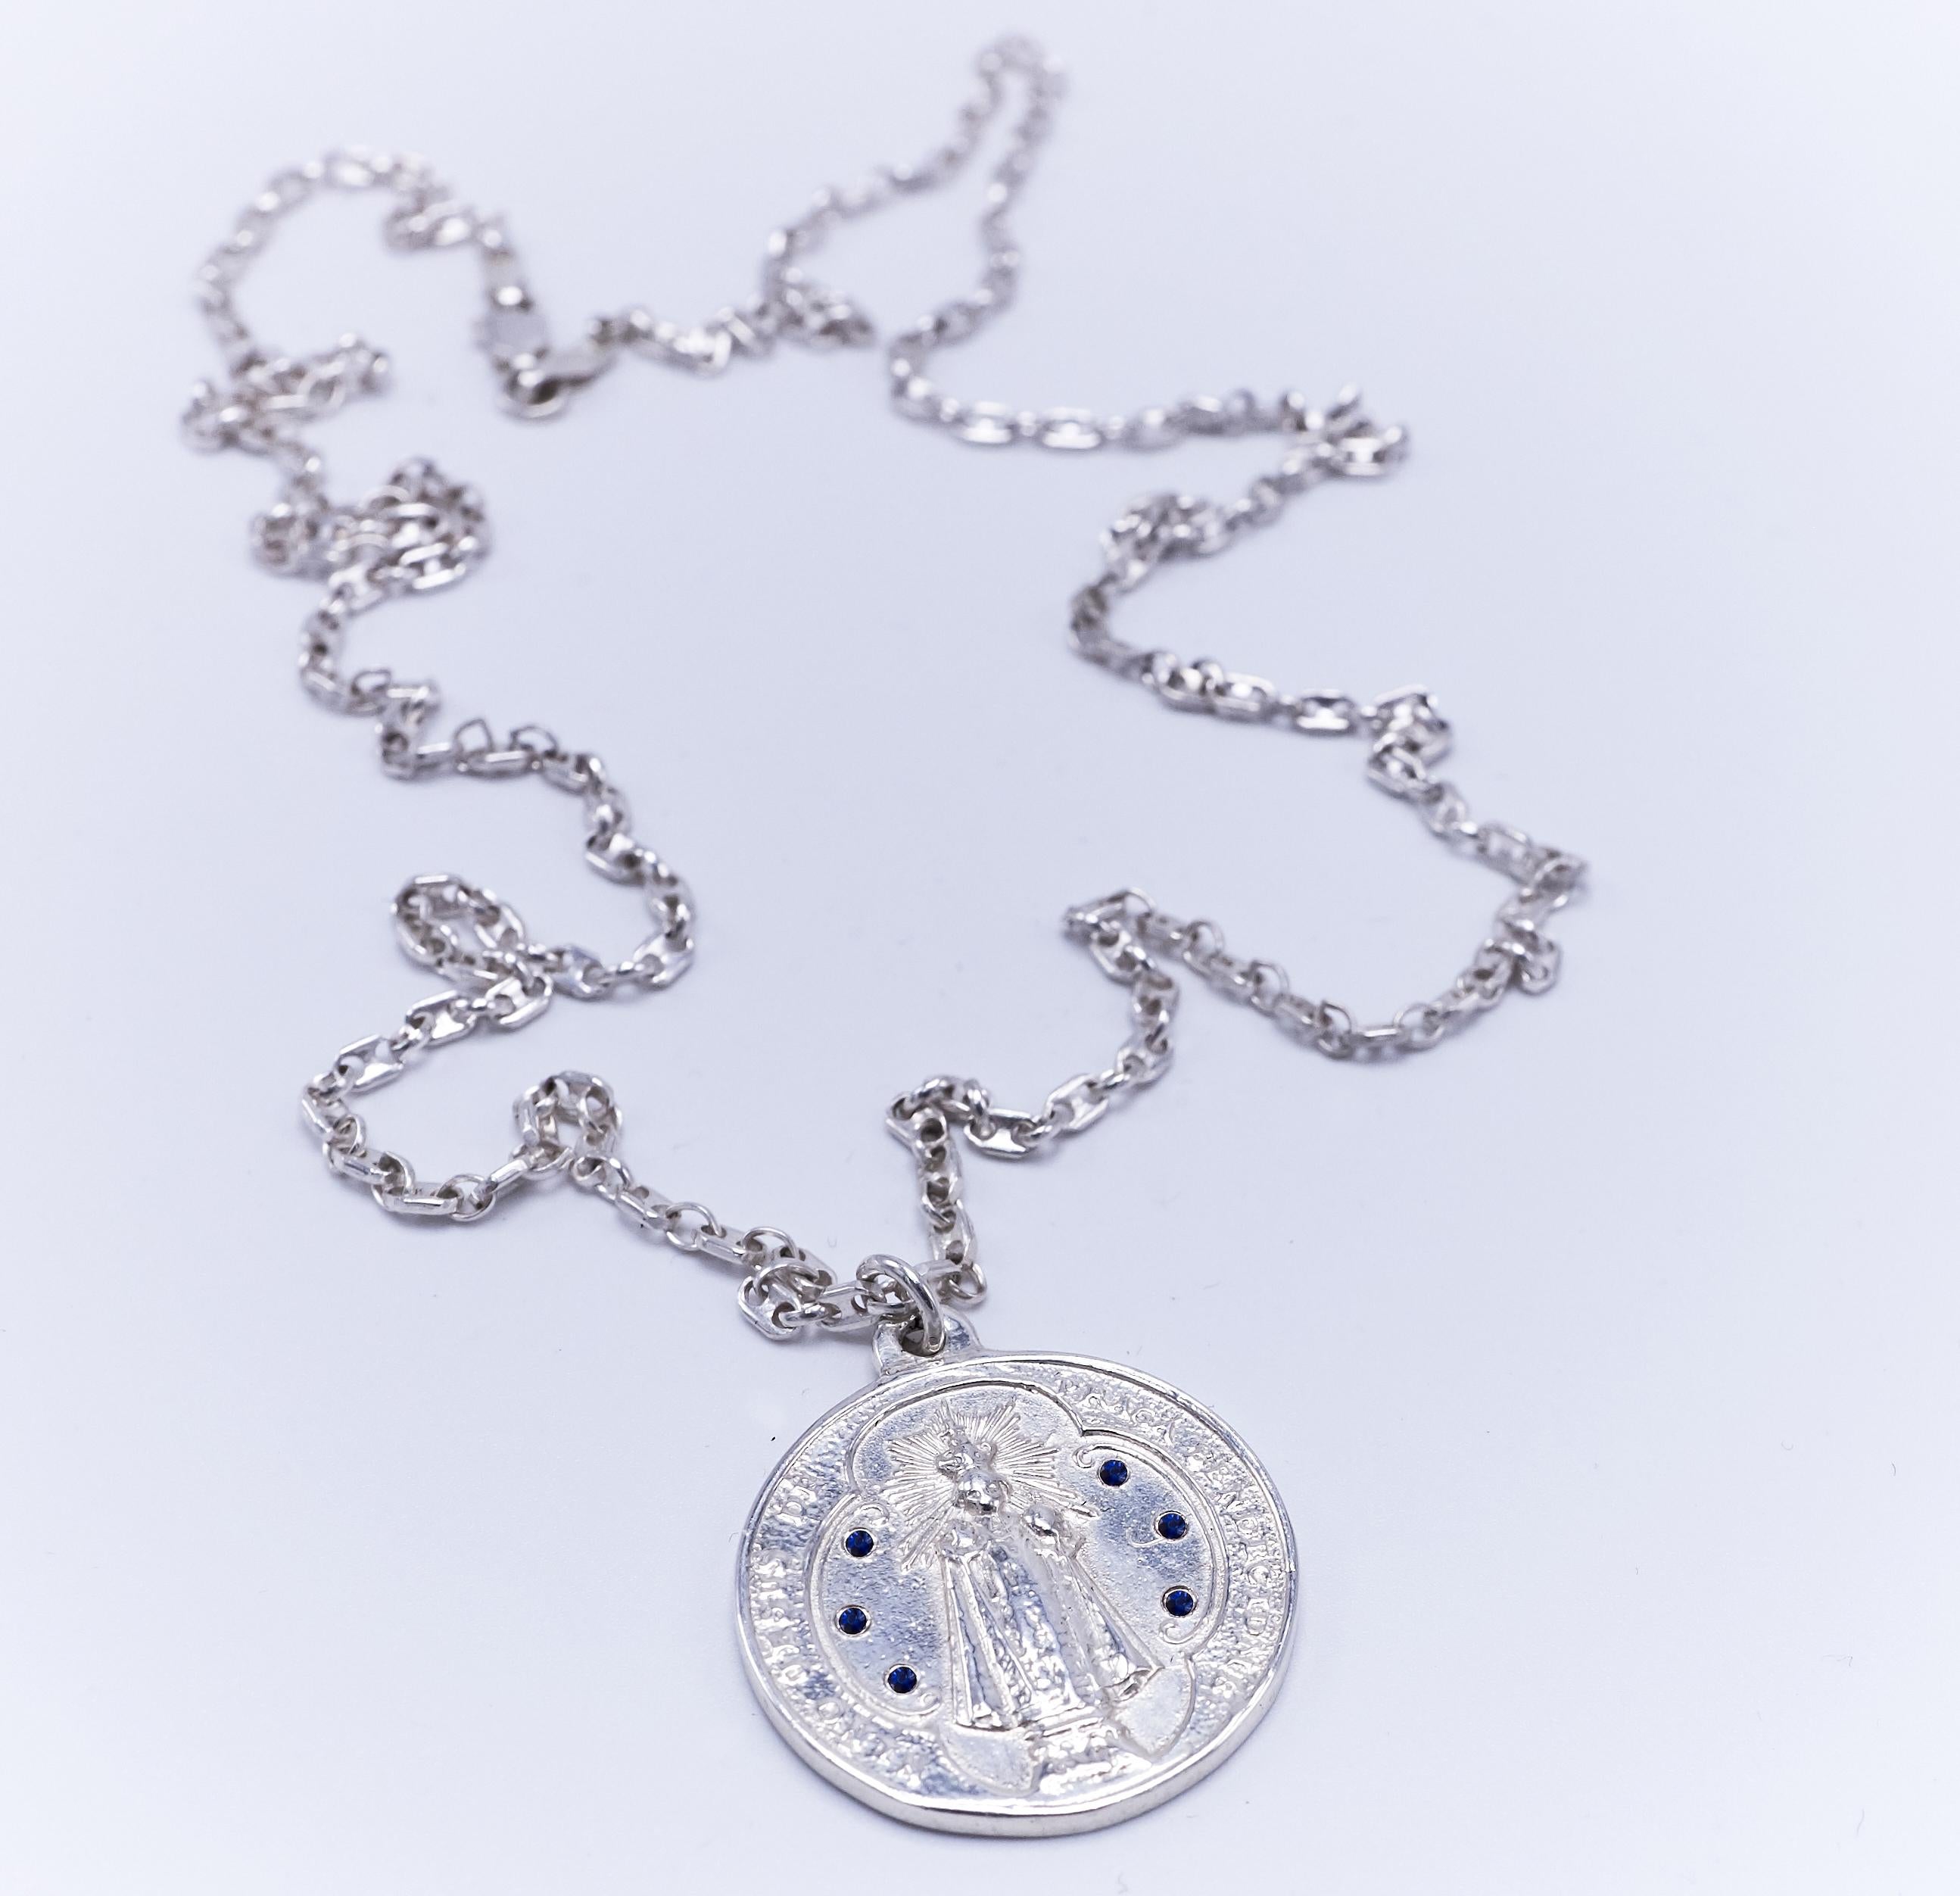 Medaille Kette Halskette Miraculous Virgin Mary Blau Saphir Silber J Dauphin

J DAUPHIN Halskette 